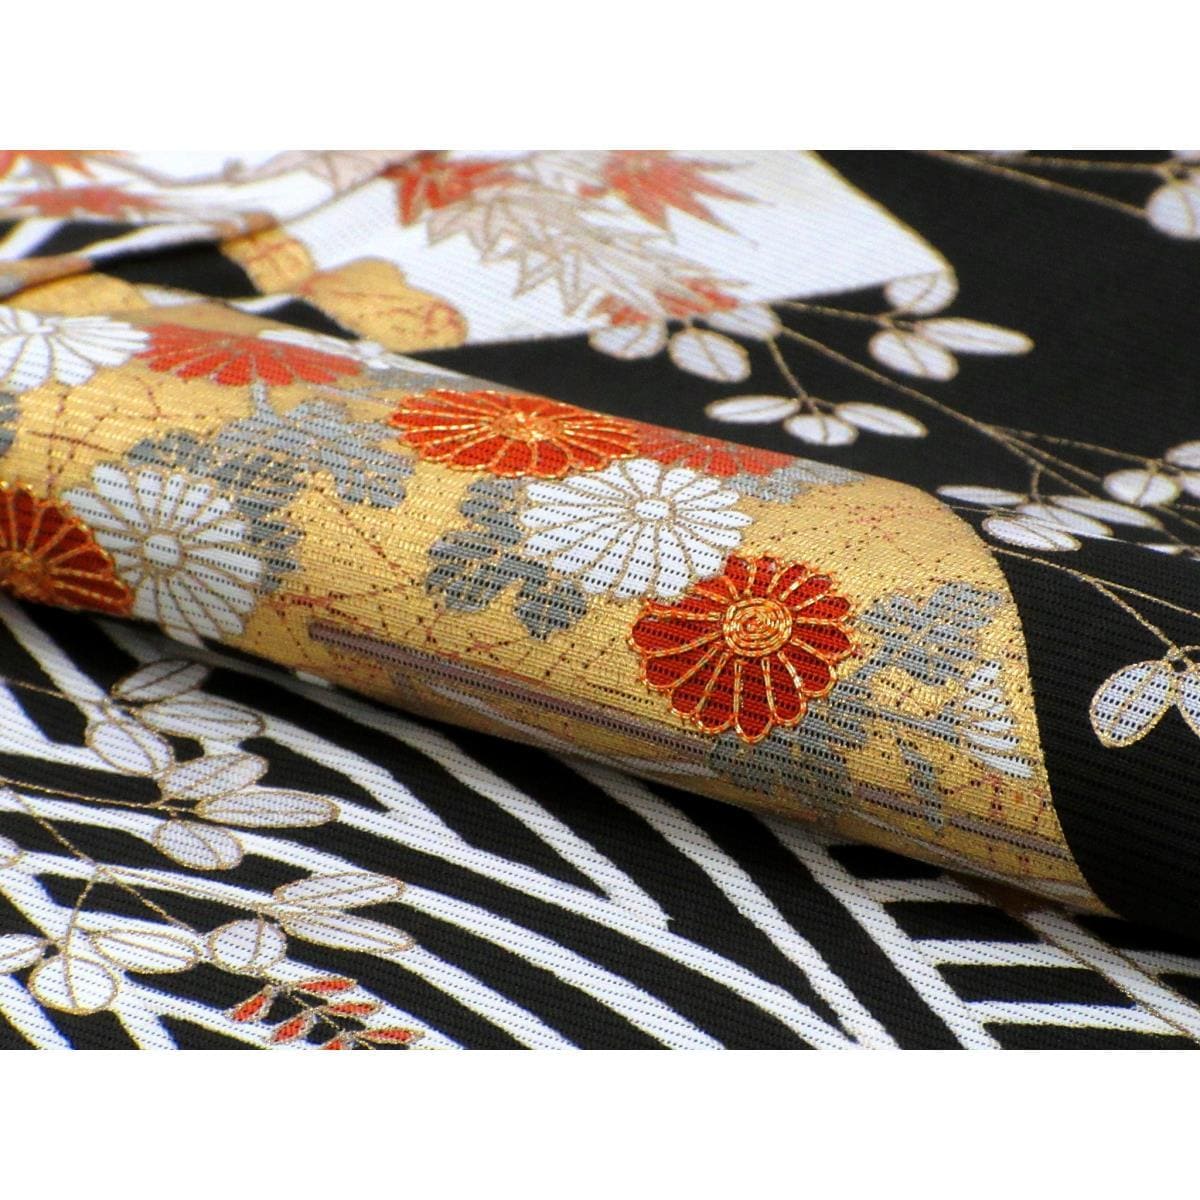 Single layer kimono with tangerine pattern